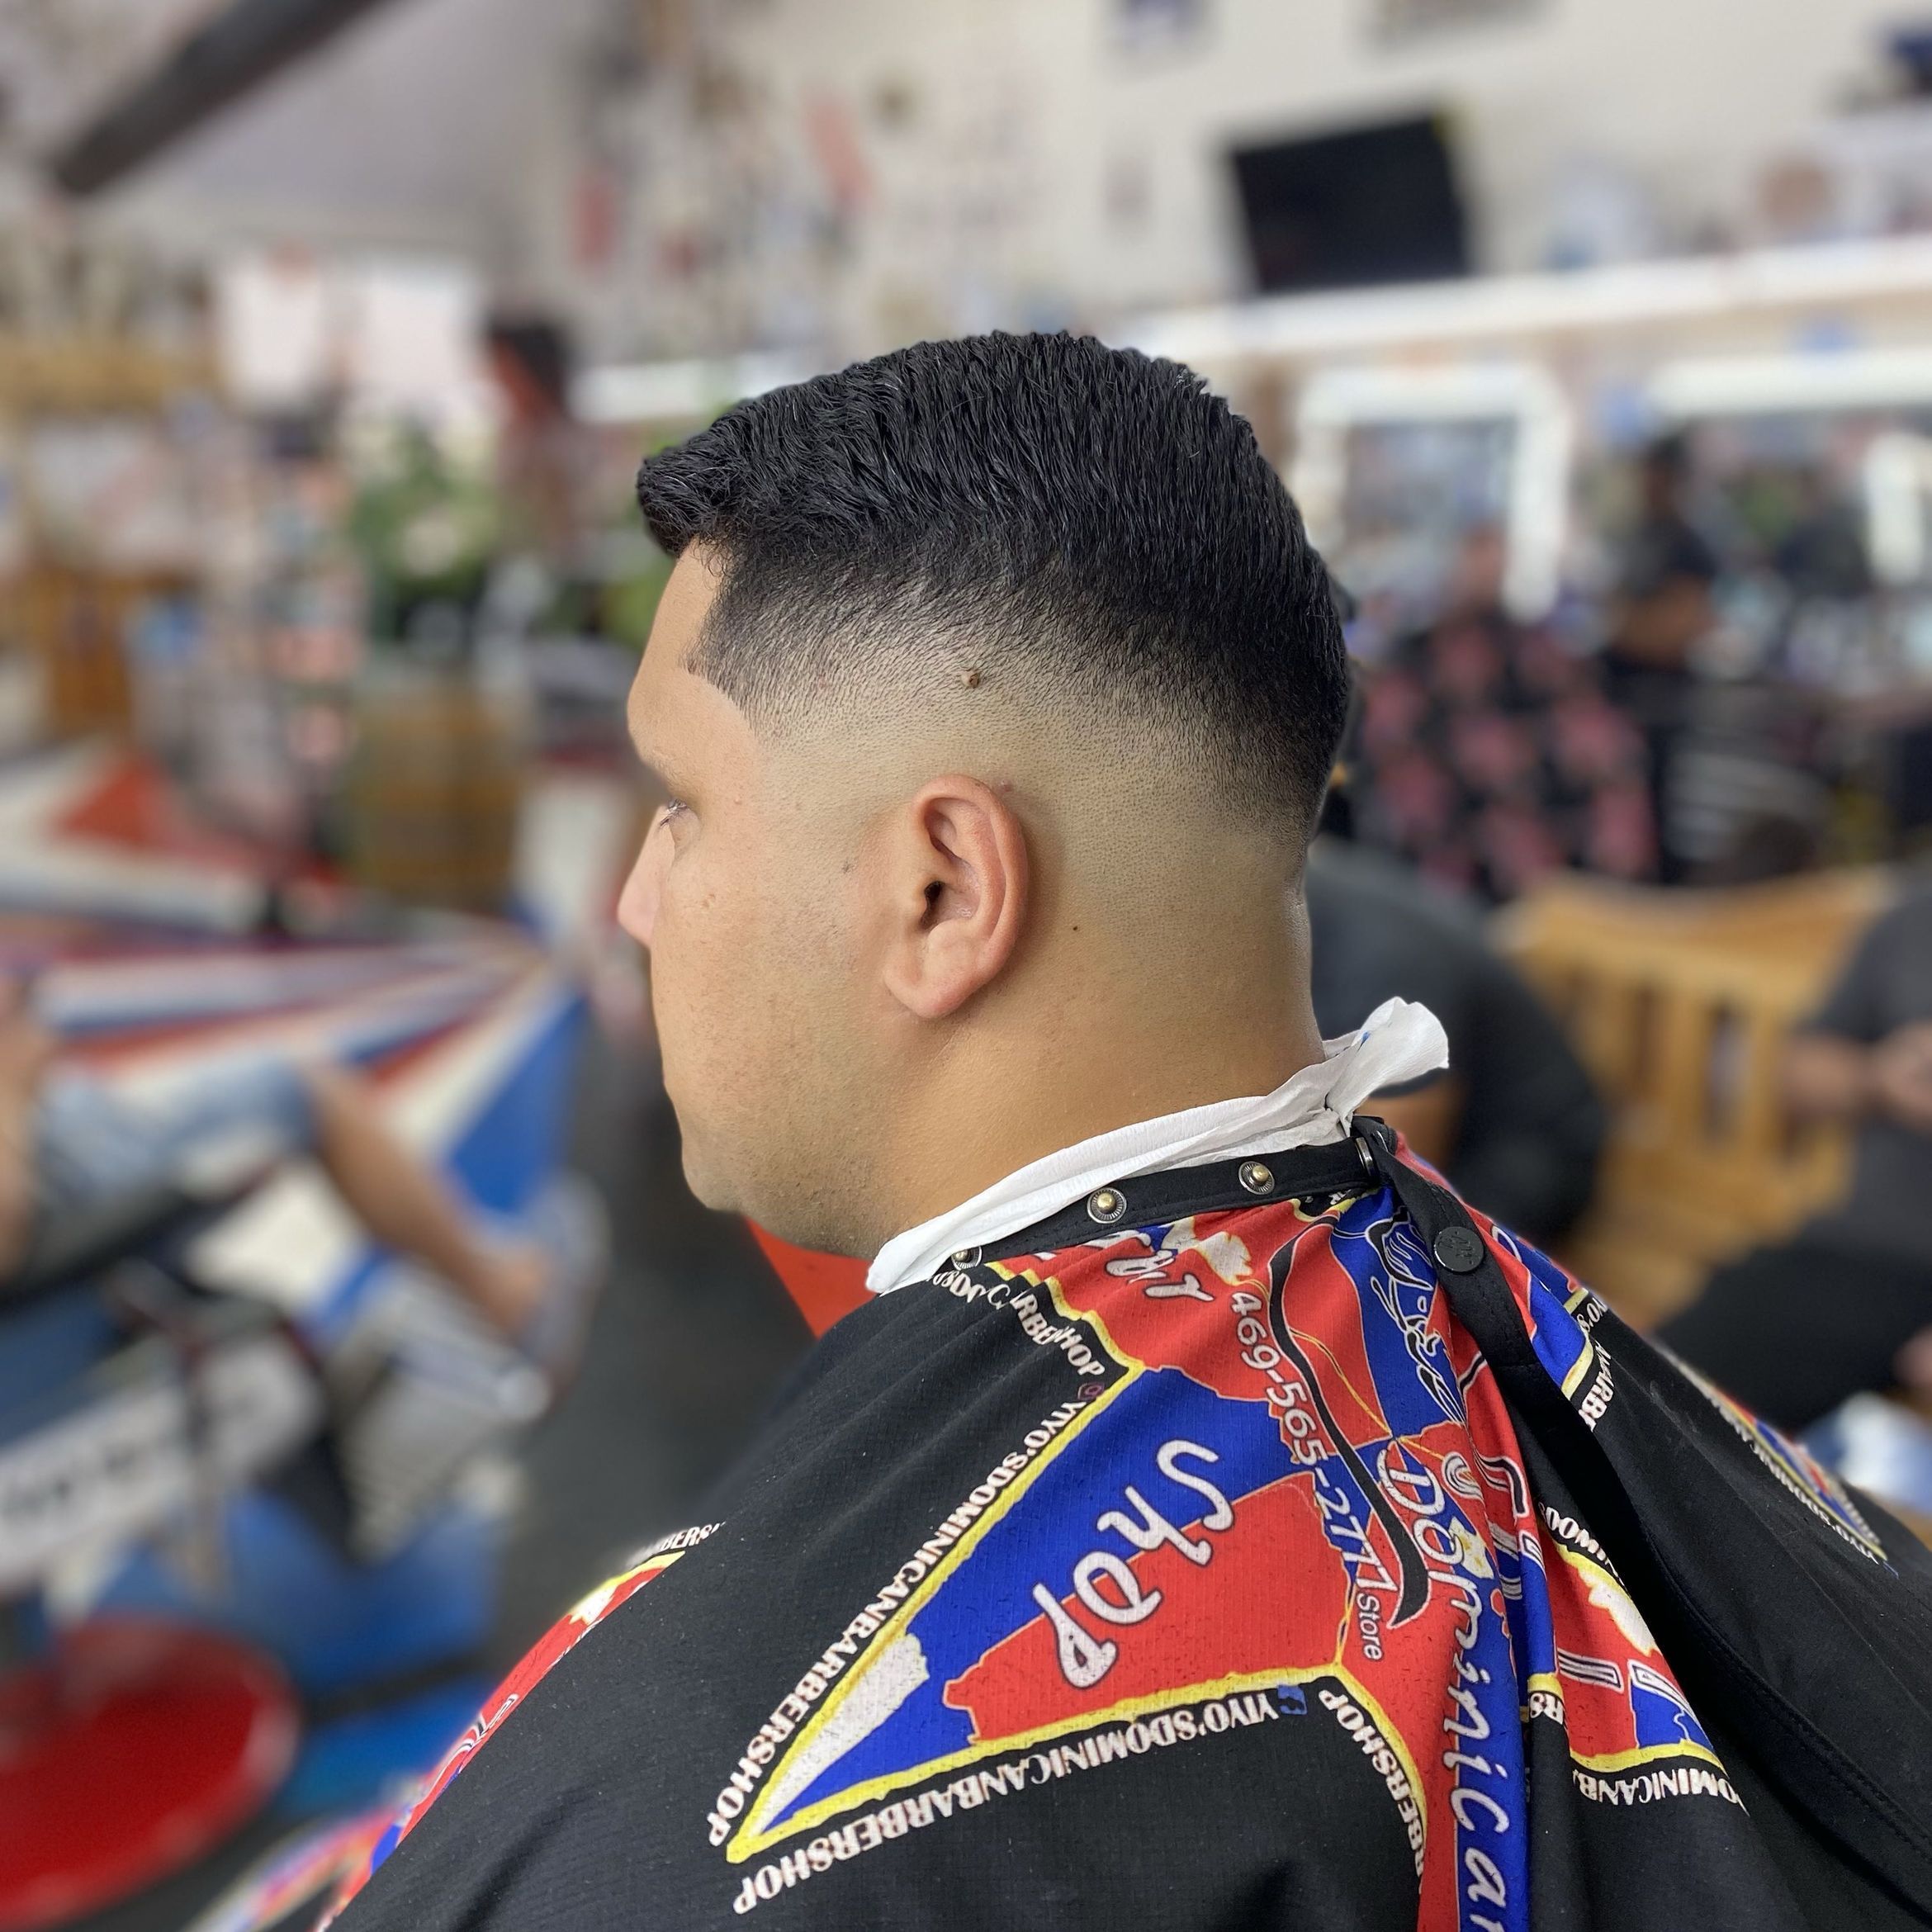 Corte regular / Regular haircut portfolio